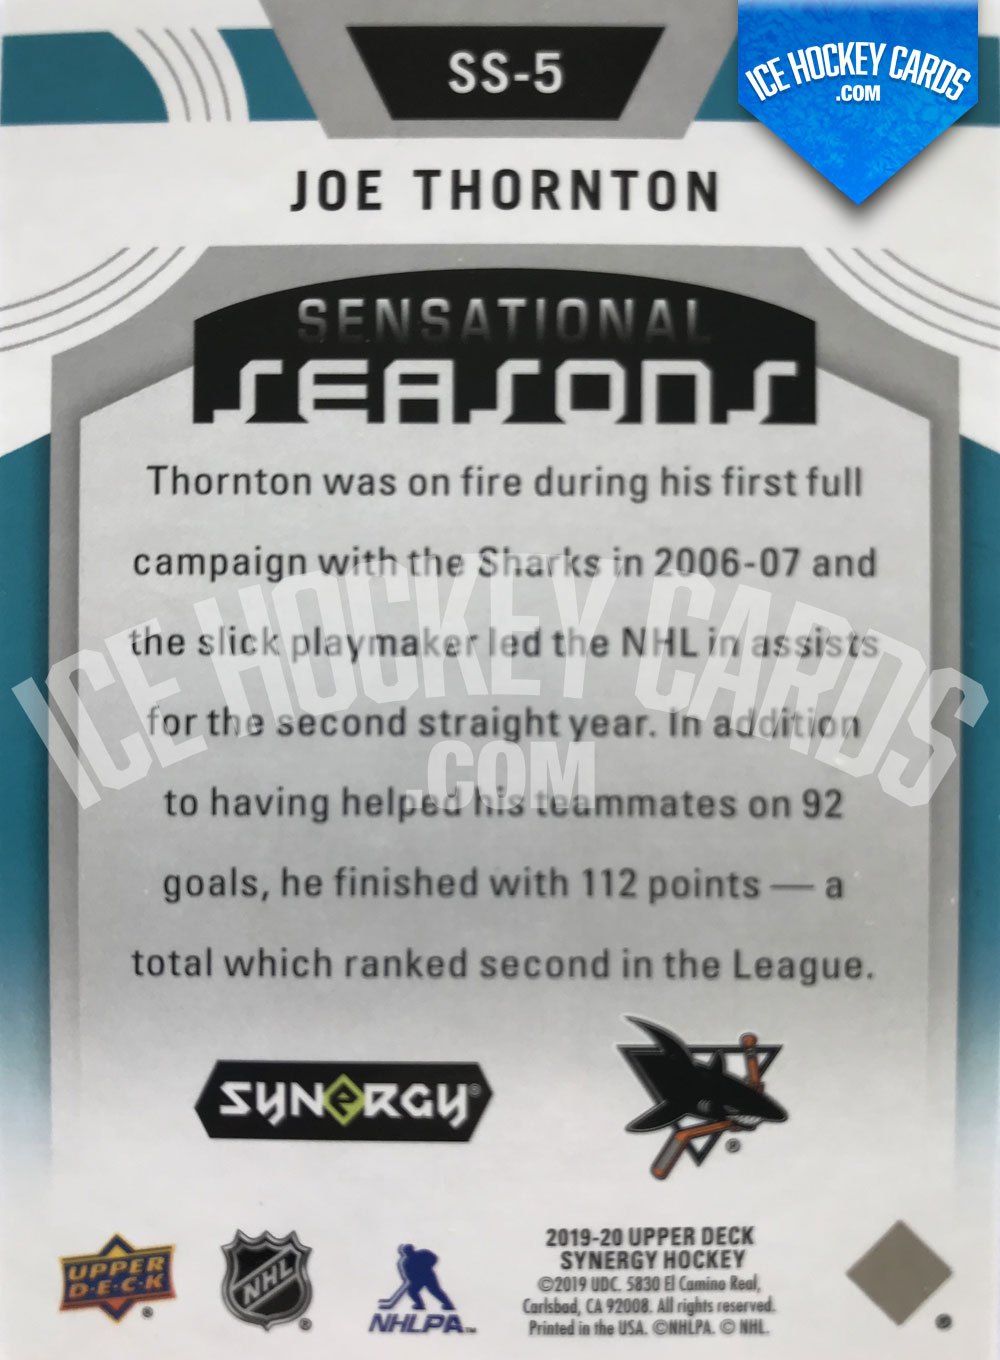 San Jose Sharks Legend Joe Thornton to play 1,500th NHL Game